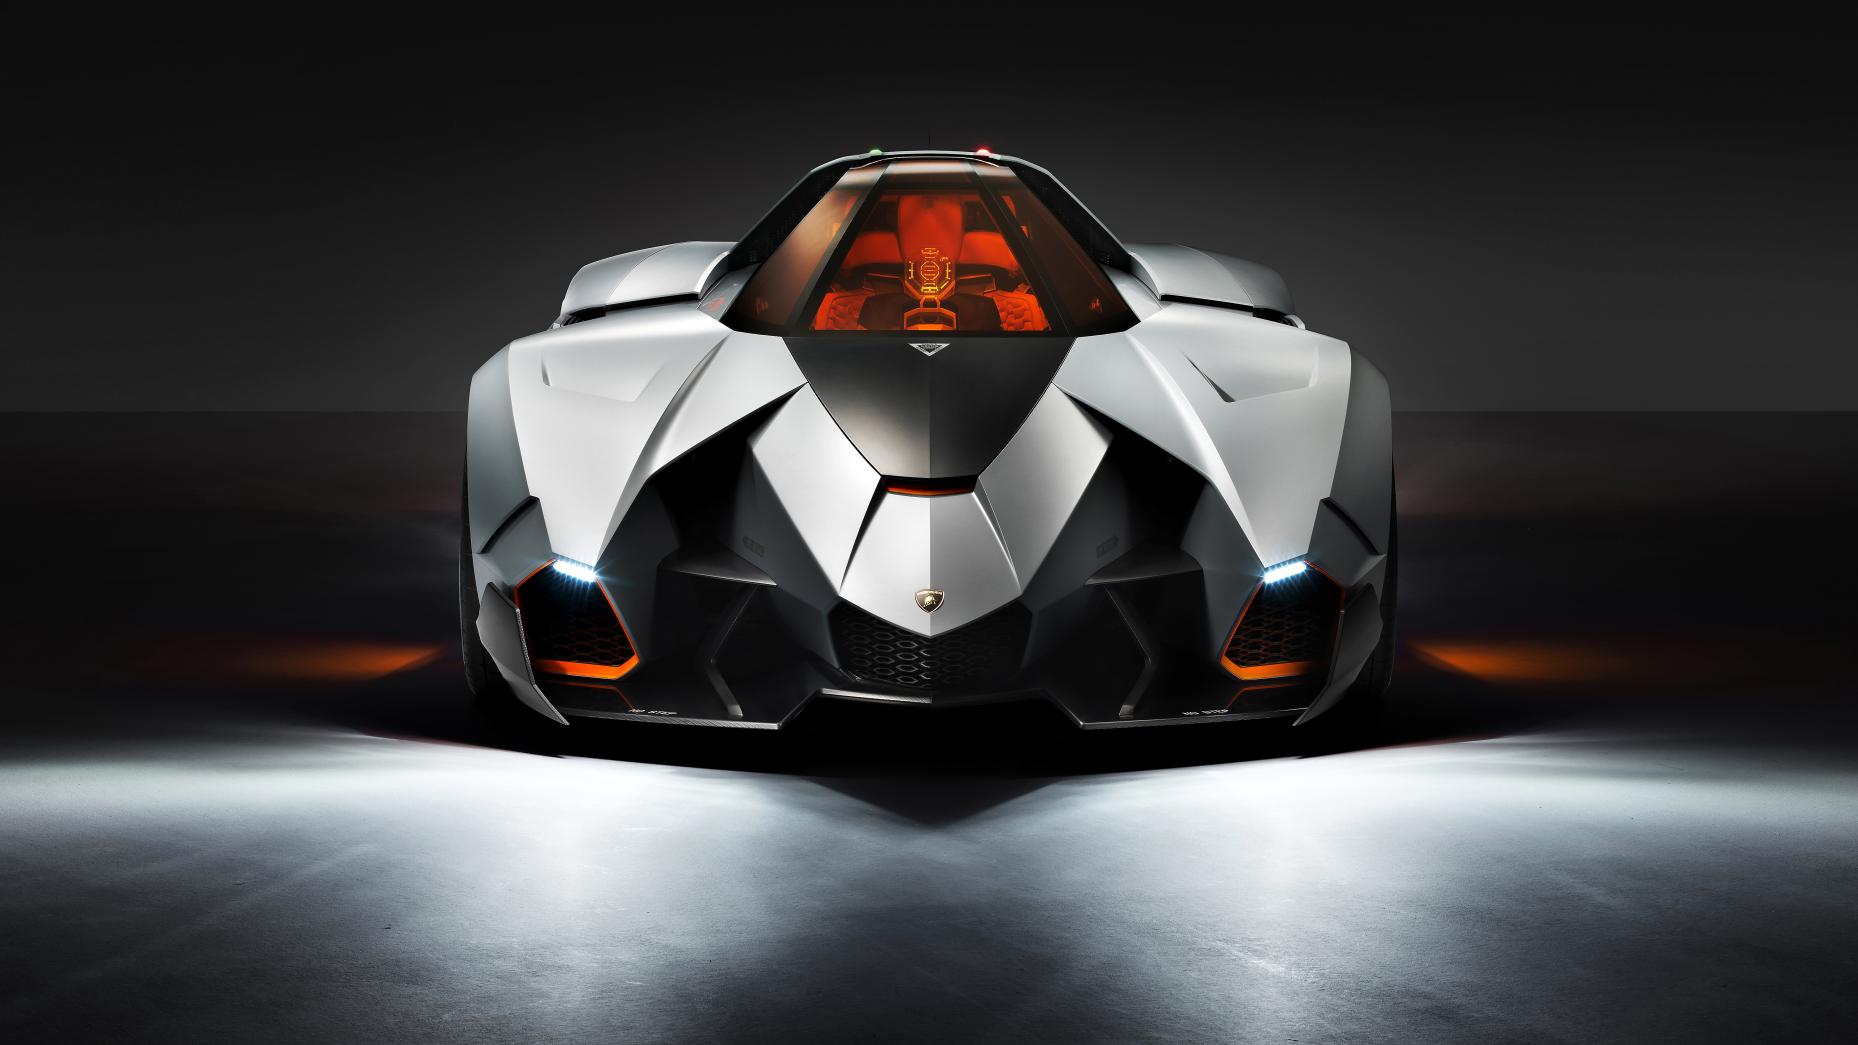 Here are 14 of the wildest Lamborghini concepts